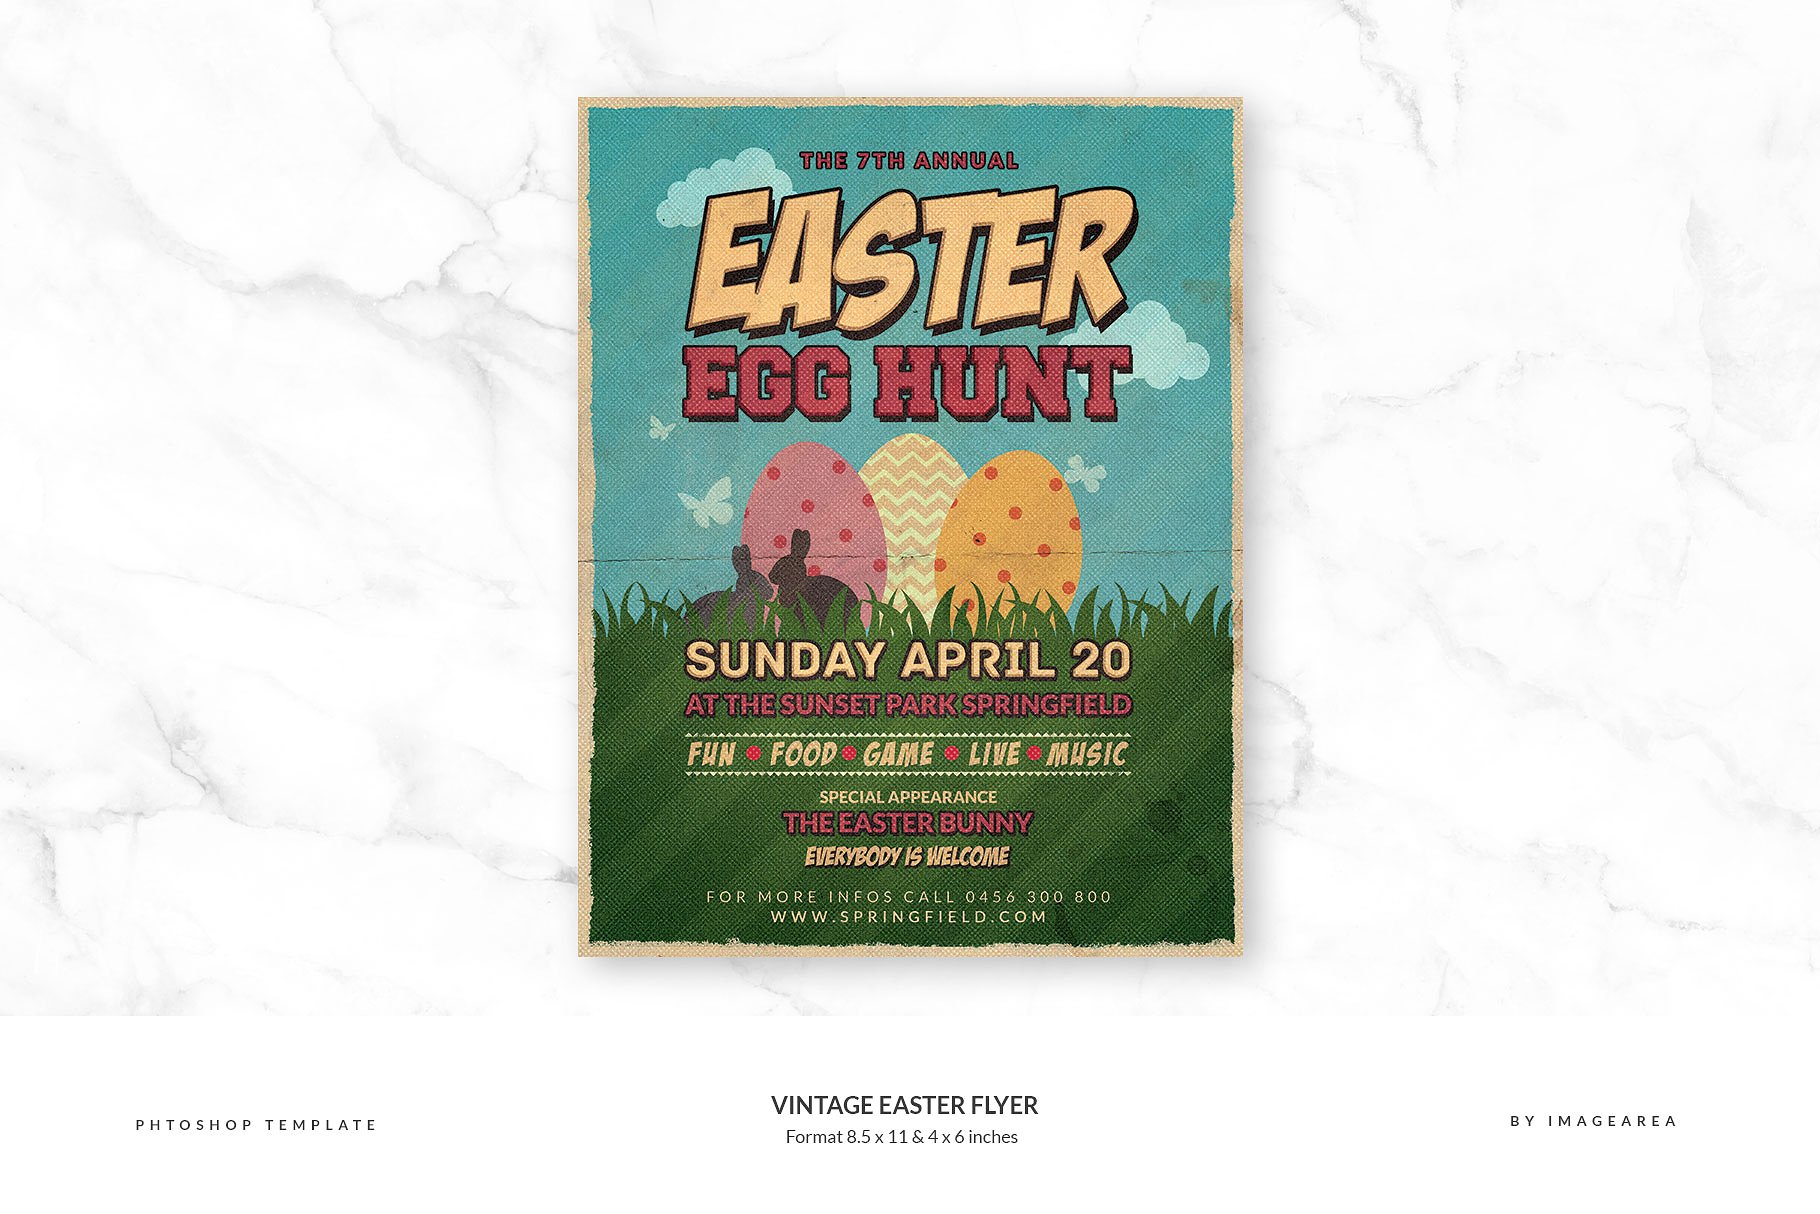 复古风格复活节活动传单模板 Vintage Easter Flyer插图